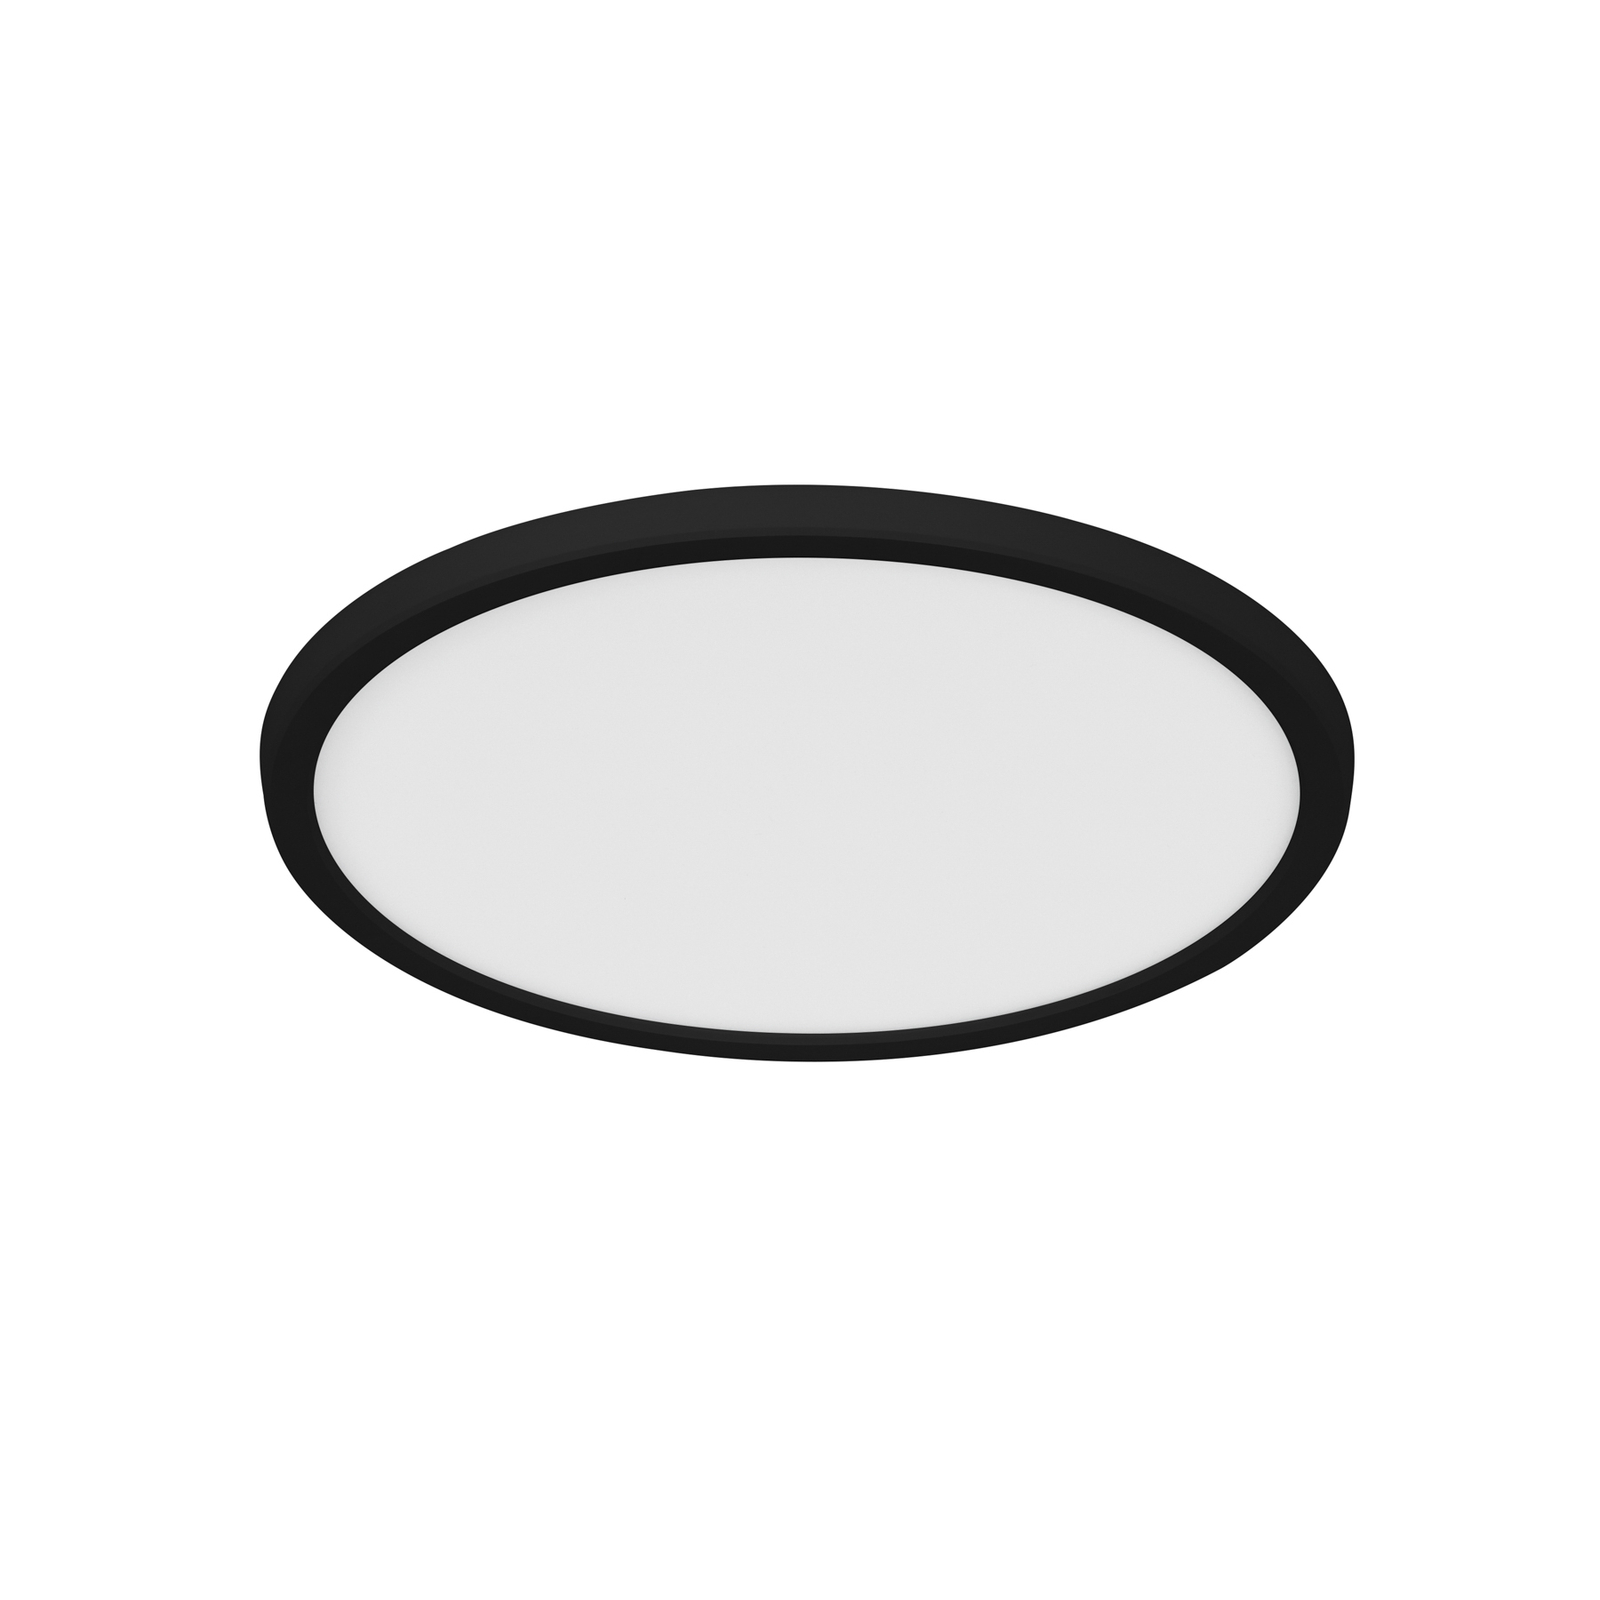 Oja Smart LED ceiling light, black, Ø 29 cm